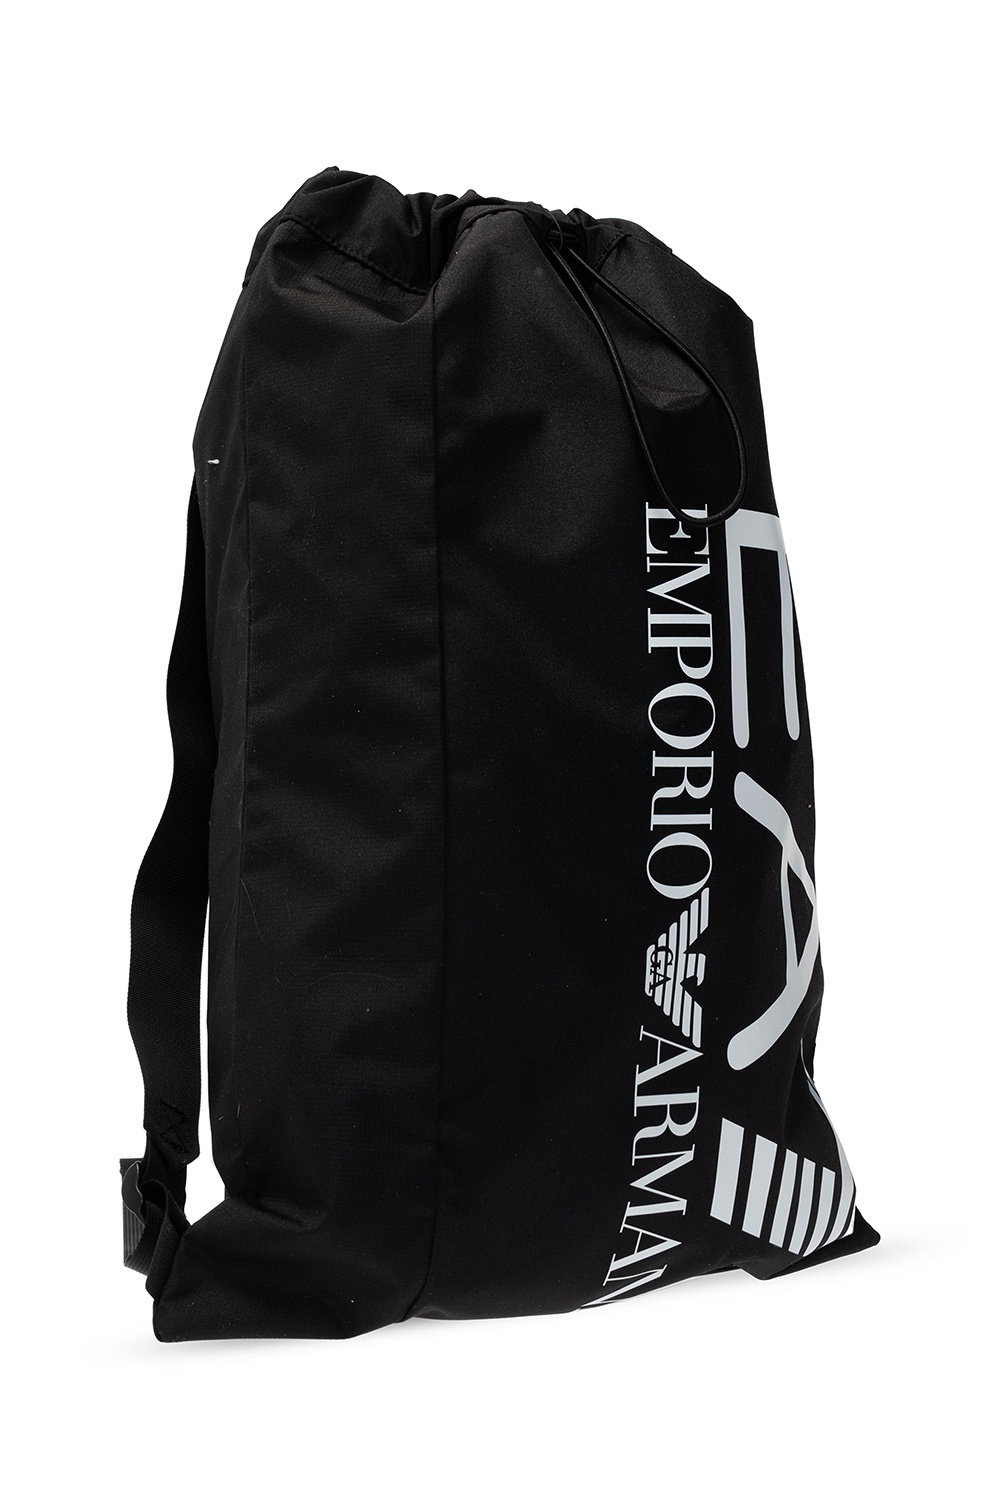 EA7 Emporio armani Kids Backpack with logo